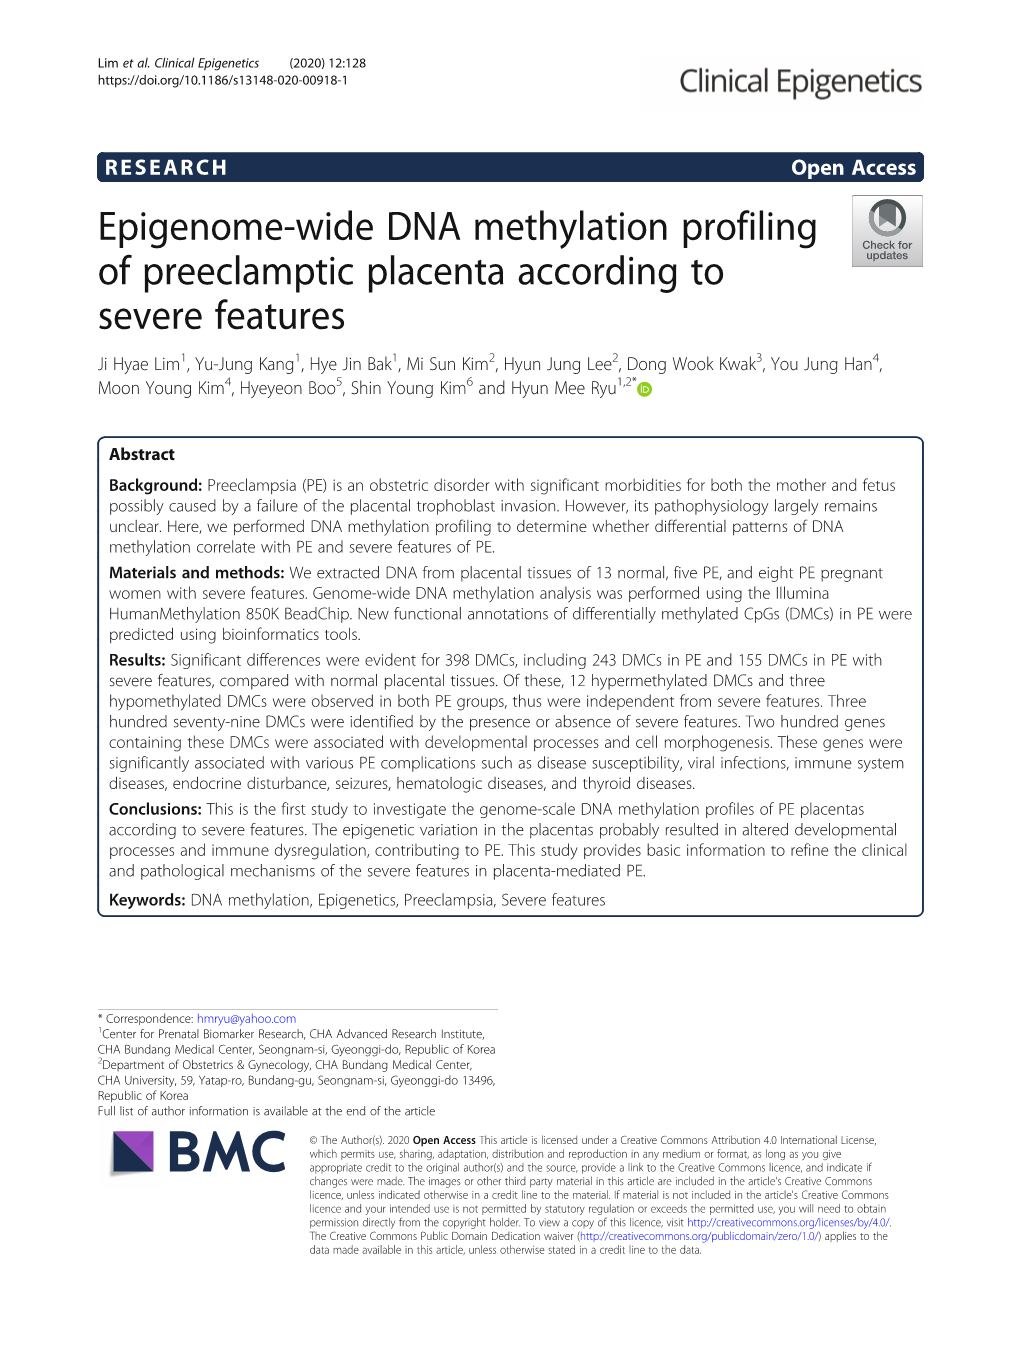 Epigenome-Wide DNA Methylation Profiling of Preeclamptic Placenta